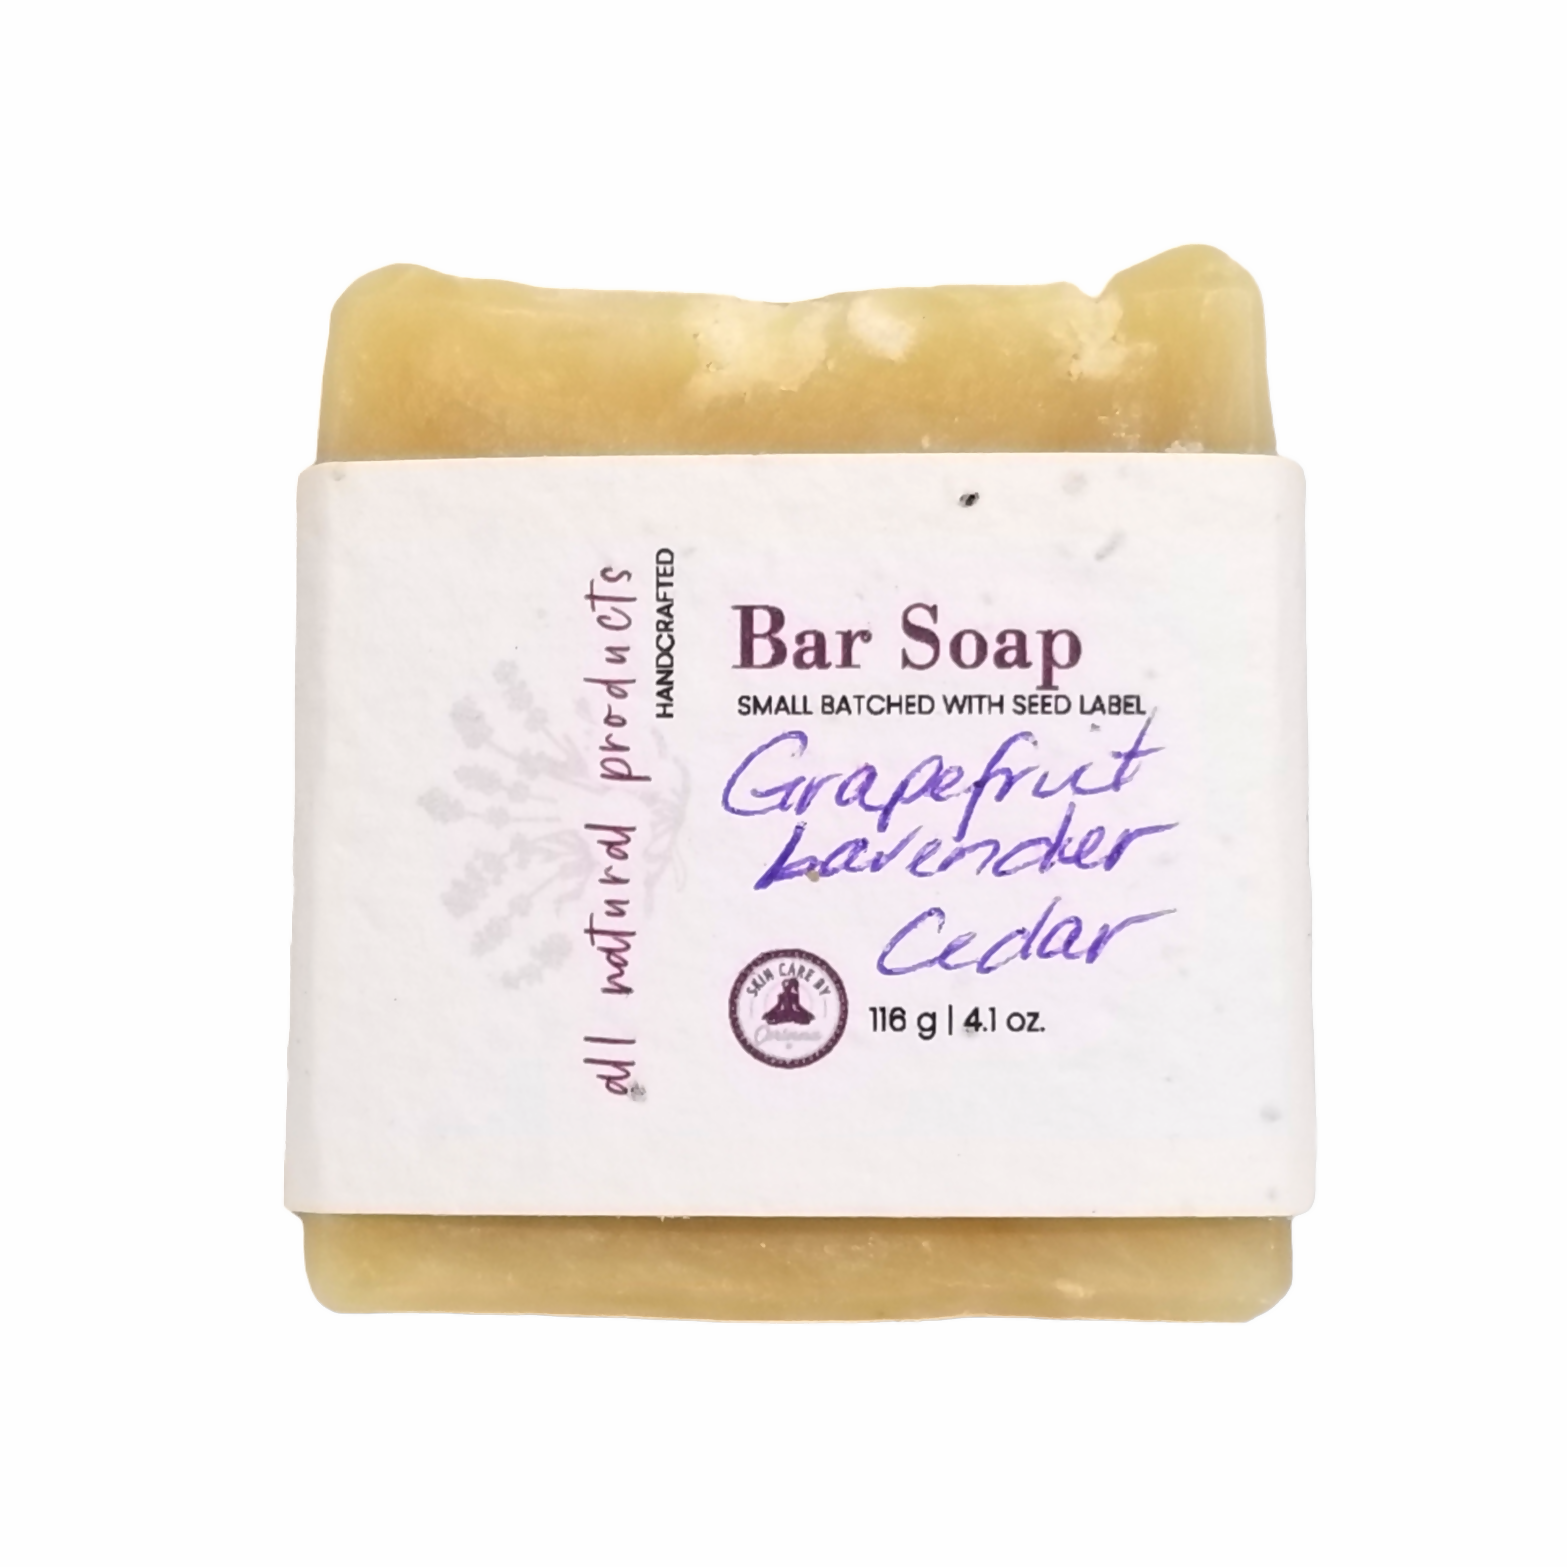 Grapefruit, Lavender & Cedar Bar Soap